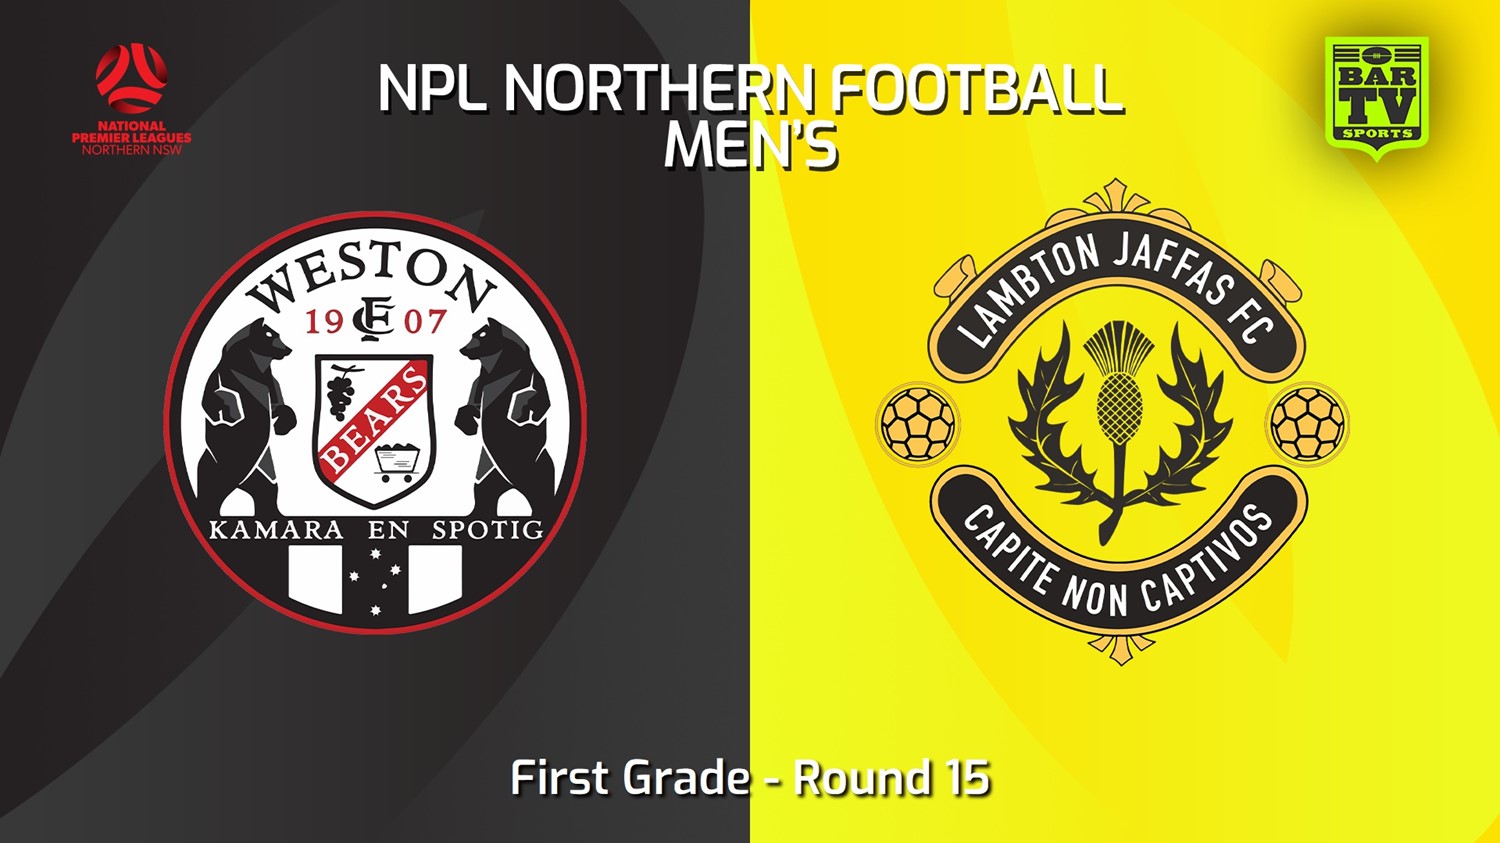 240616-video-NNSW NPLM Round 15 - Weston Workers FC v Lambton Jaffas FC Minigame Slate Image